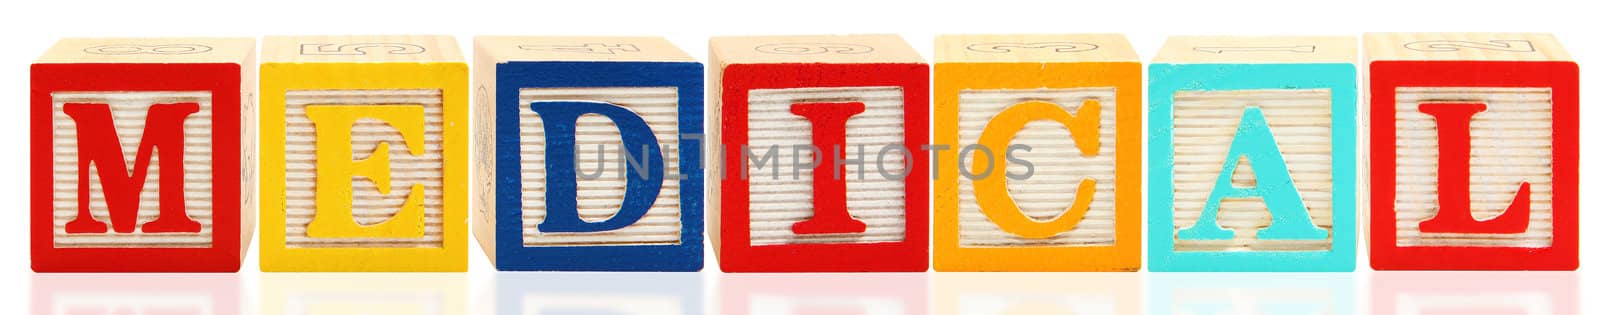 Colorful alphabet blocks. MEDICAL